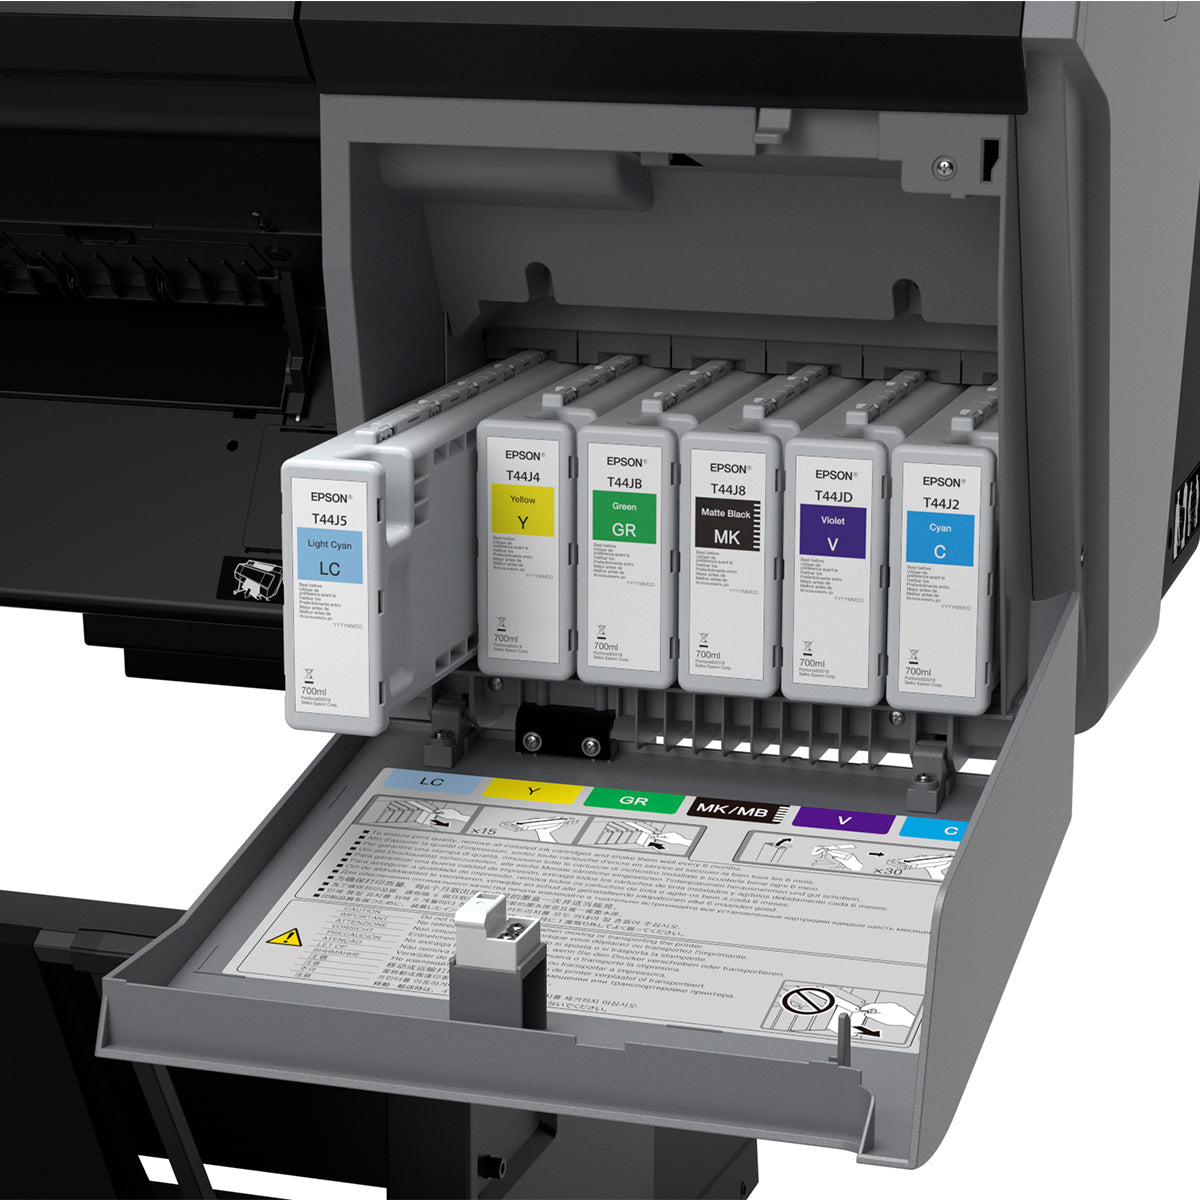 Epson SureColor P7570 Standard Edition Printer